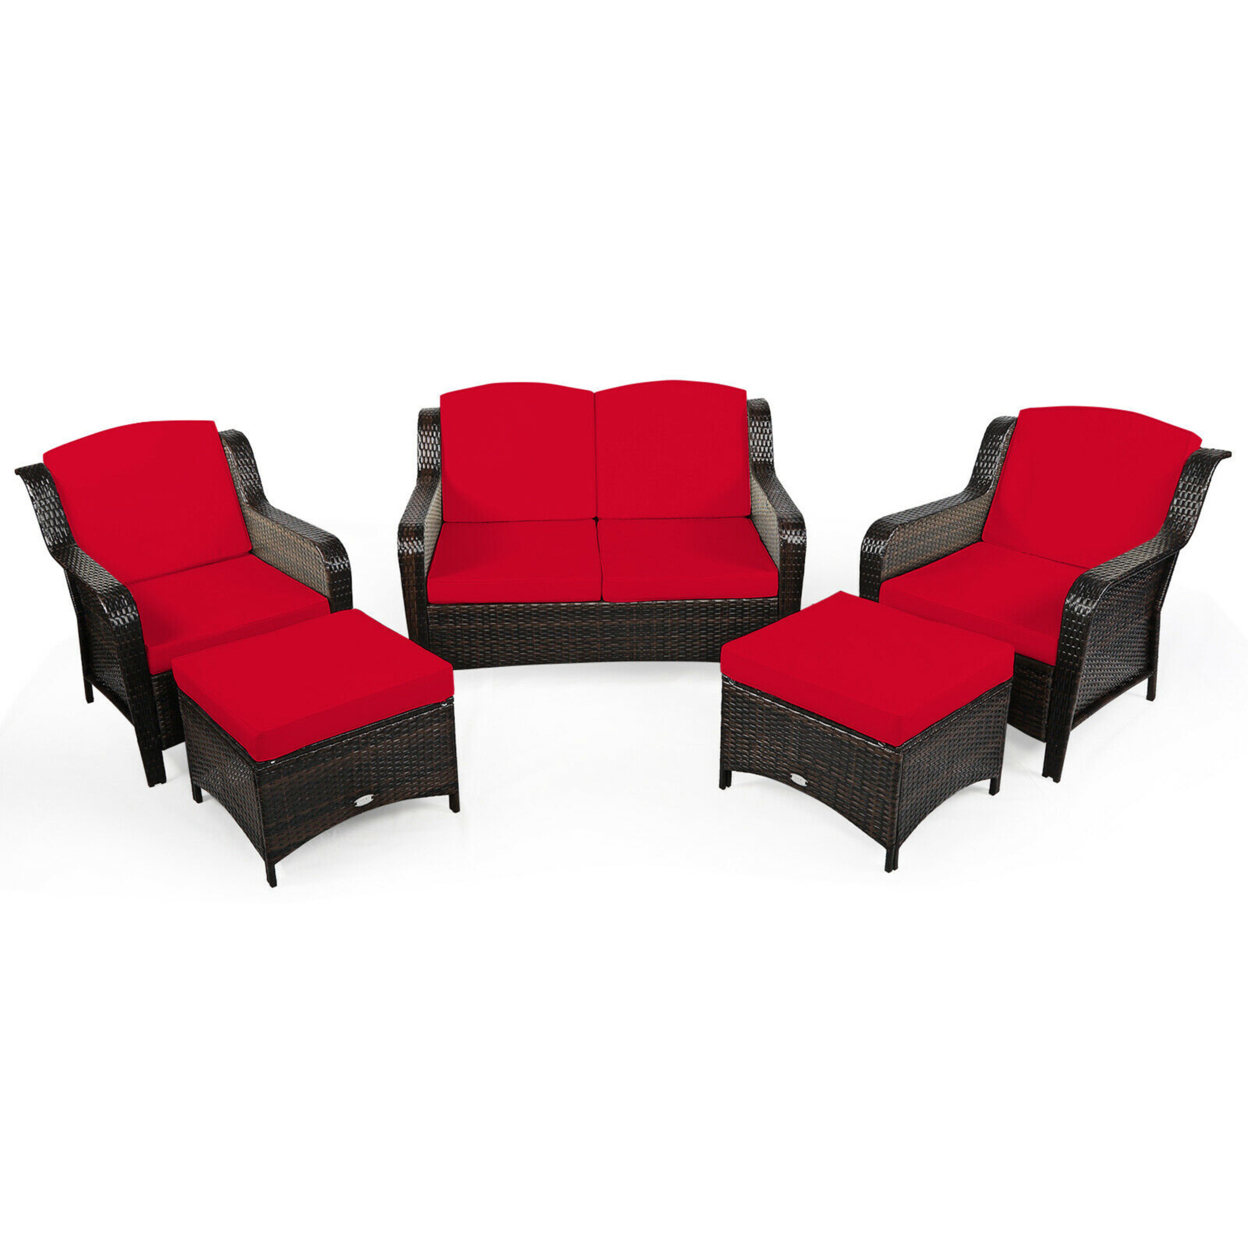 5PCS Rattan Patio Conversation Sofa Furniture Set Outdoor W/ Red Cushions